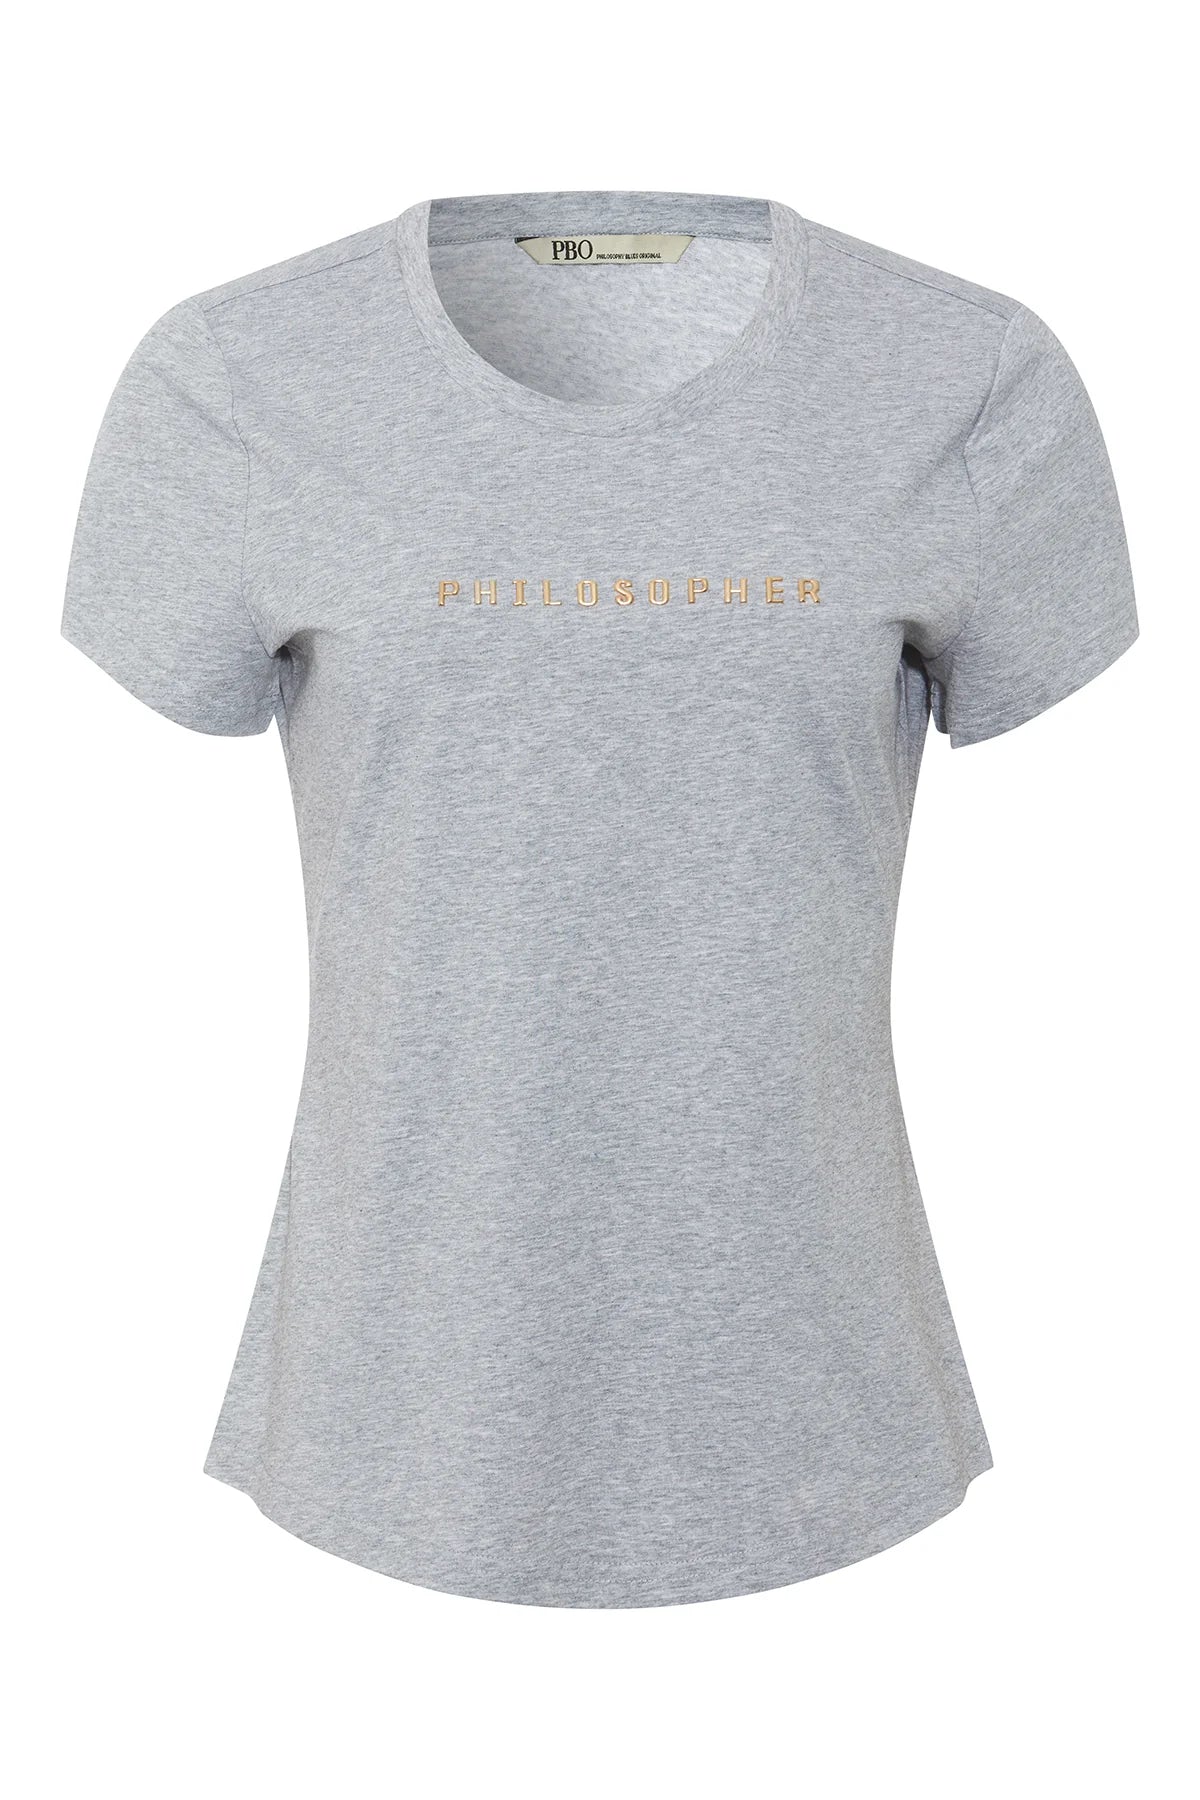 Philosopher T-shirt - Grey